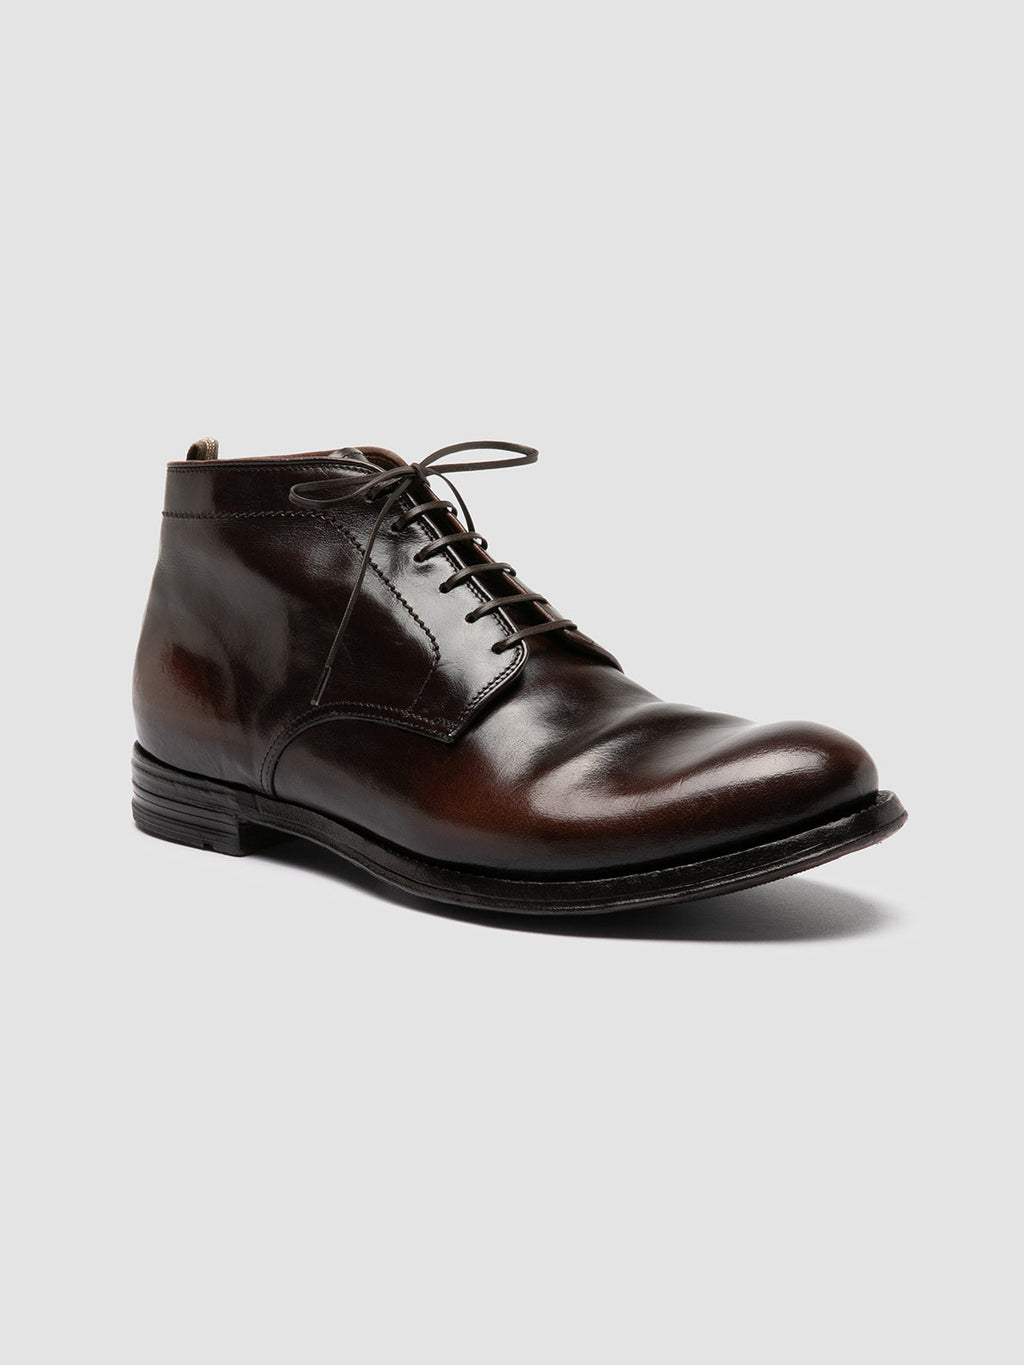 ANATOMIA 88 - Brown Leather Chukka Boots Men Officine Creative - 3